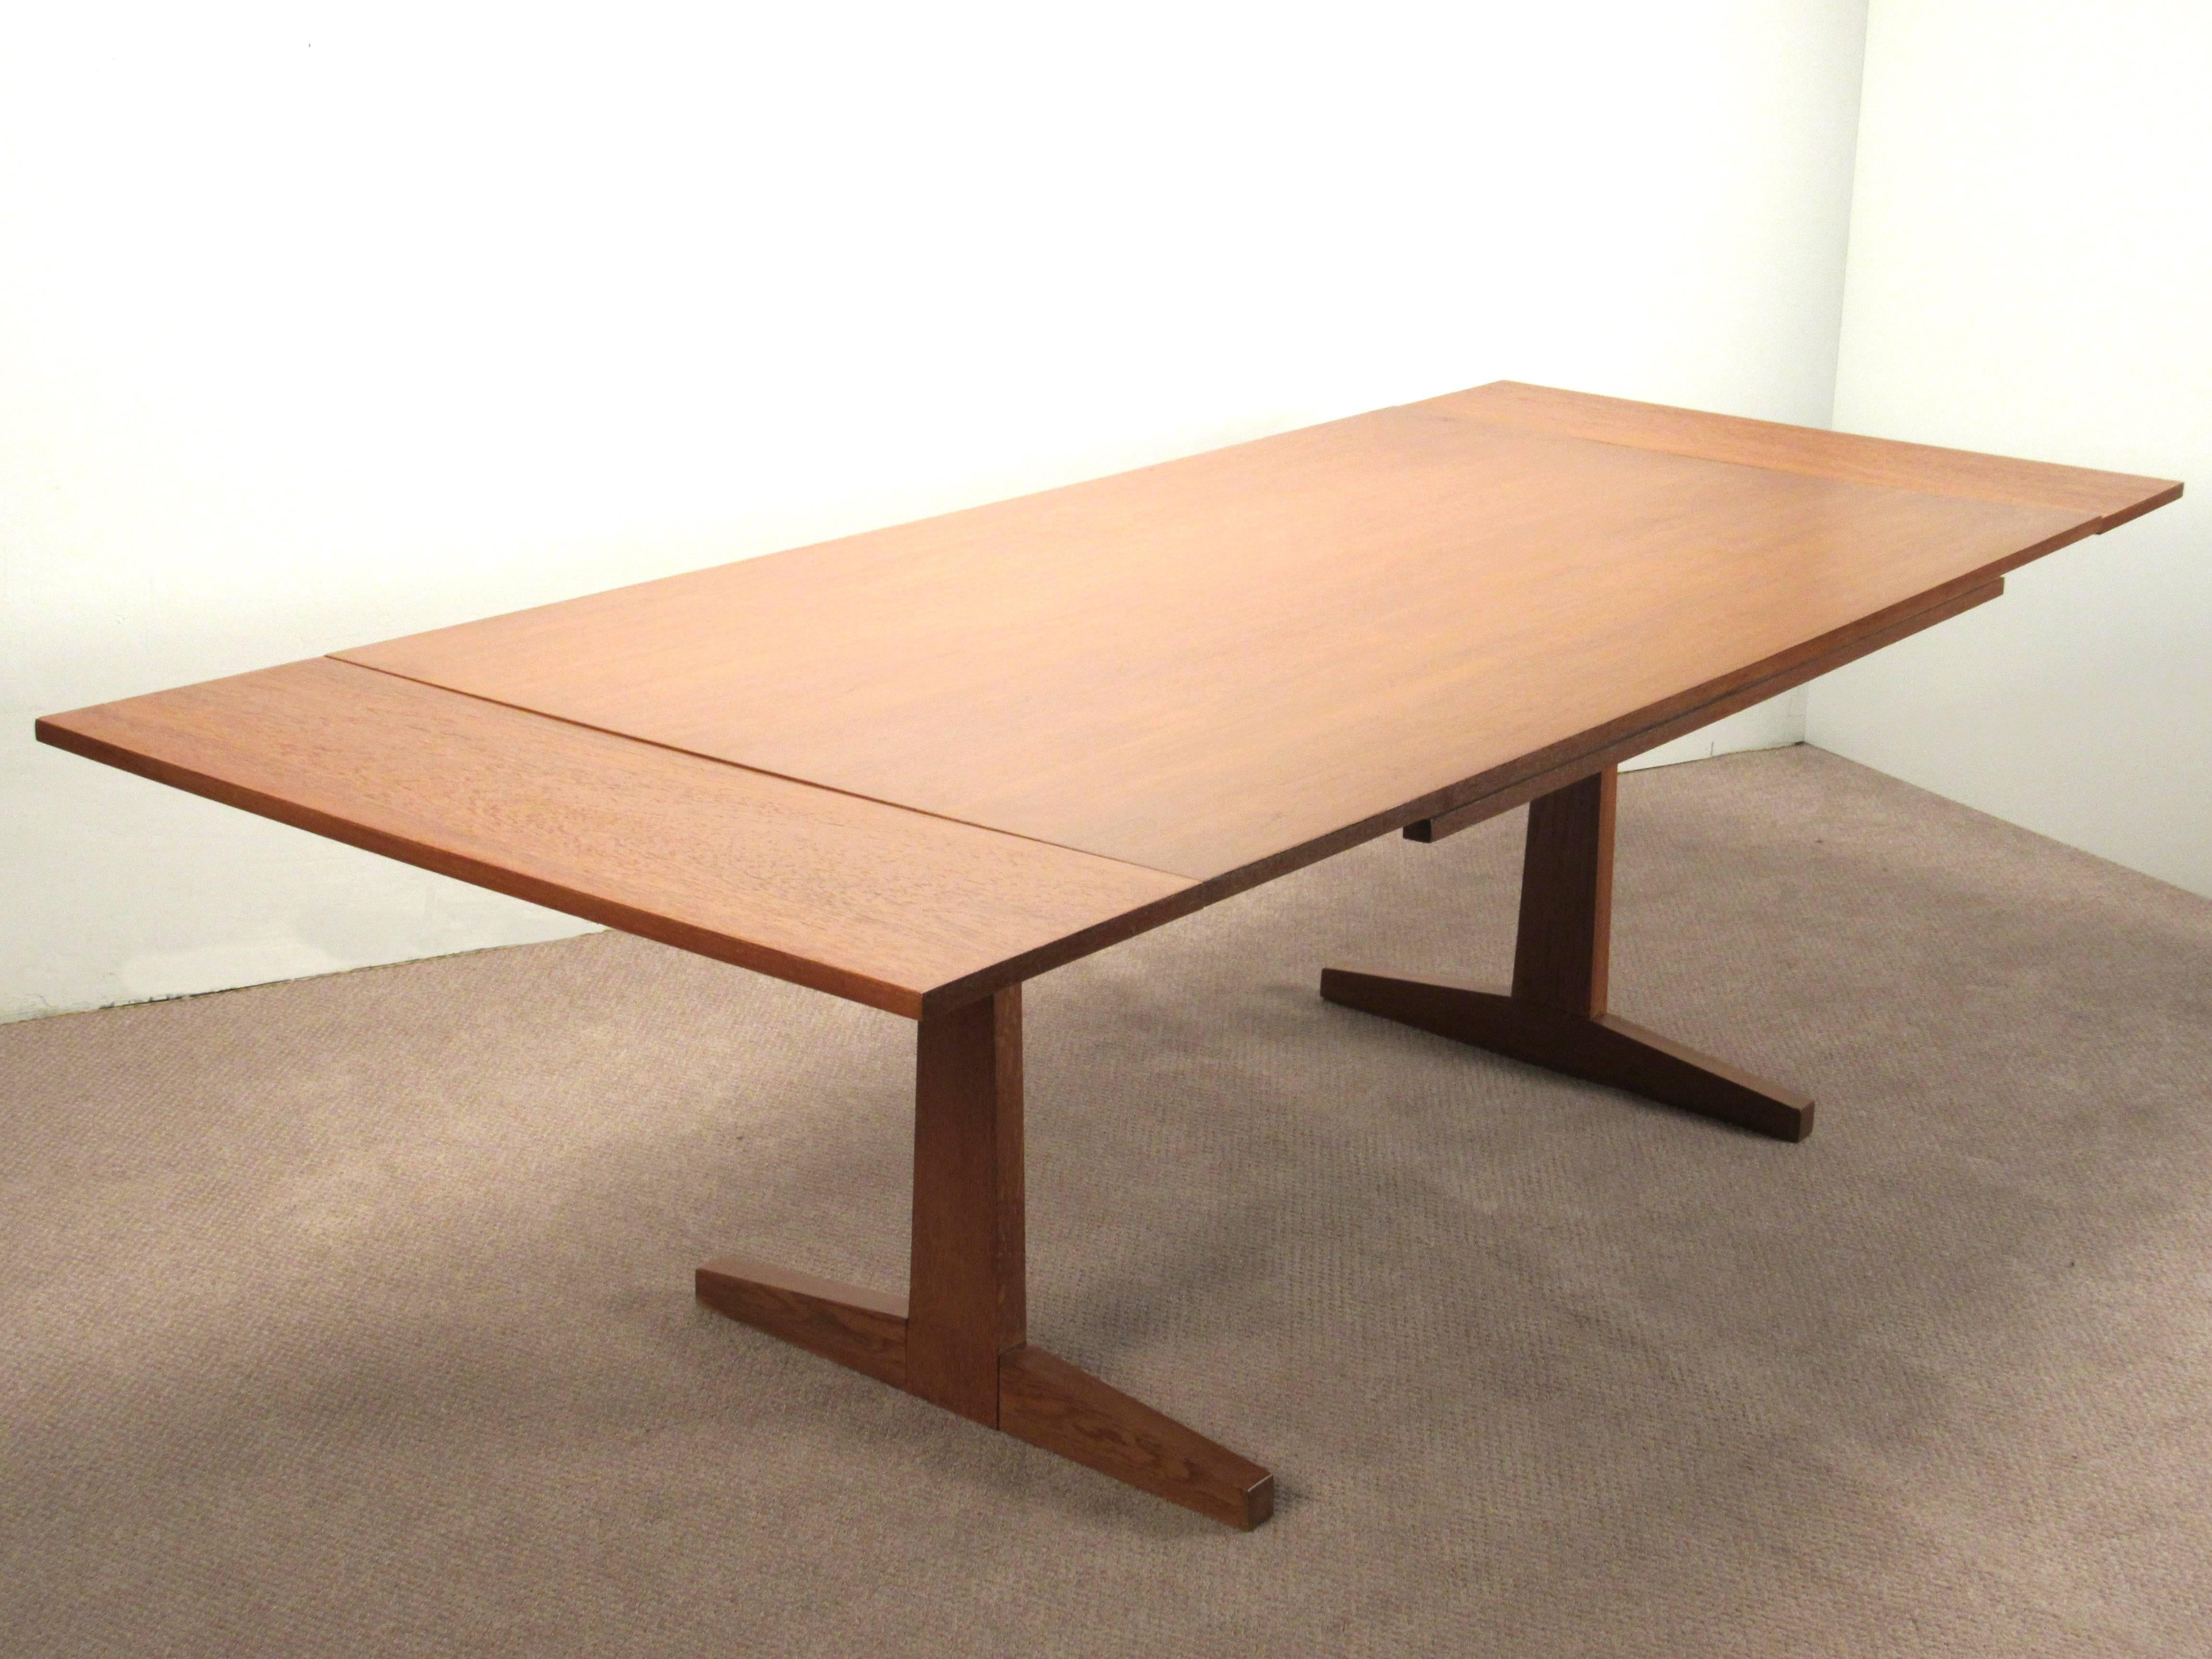 20th Century Danish Modern Teak Extending Table with Pedestal Base, 1960s For Sale